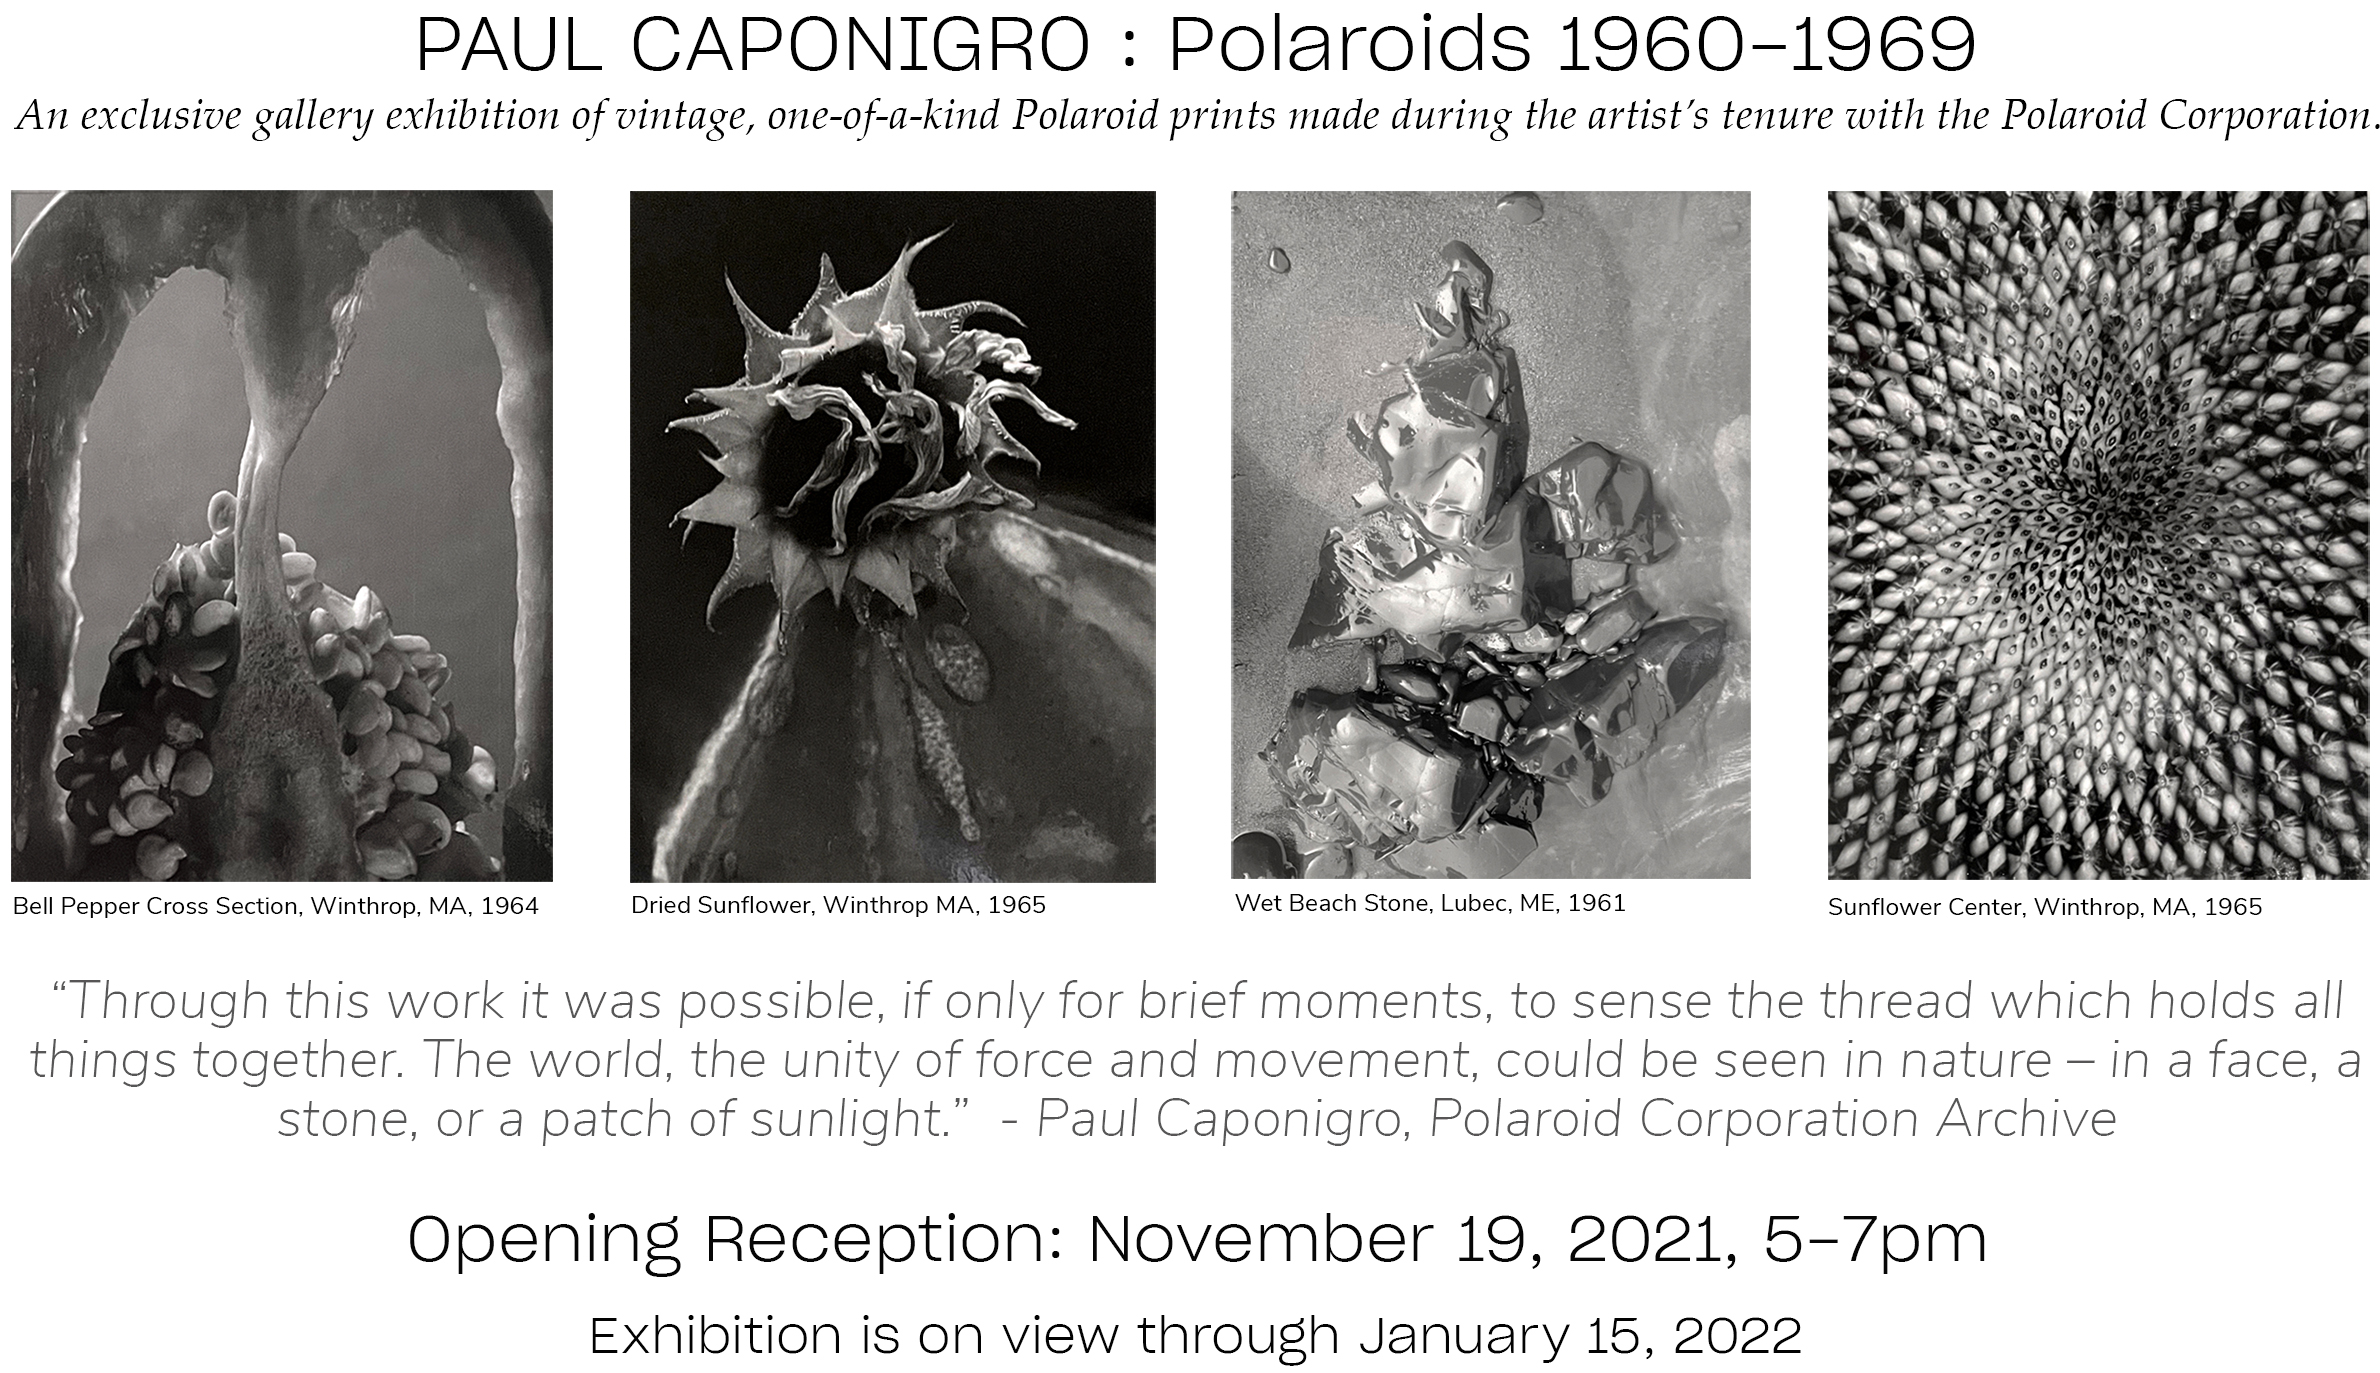 Paul Caponigro Polaroids 1960-1969, opening reception November 19, 2021 on view through January 15, 2022.